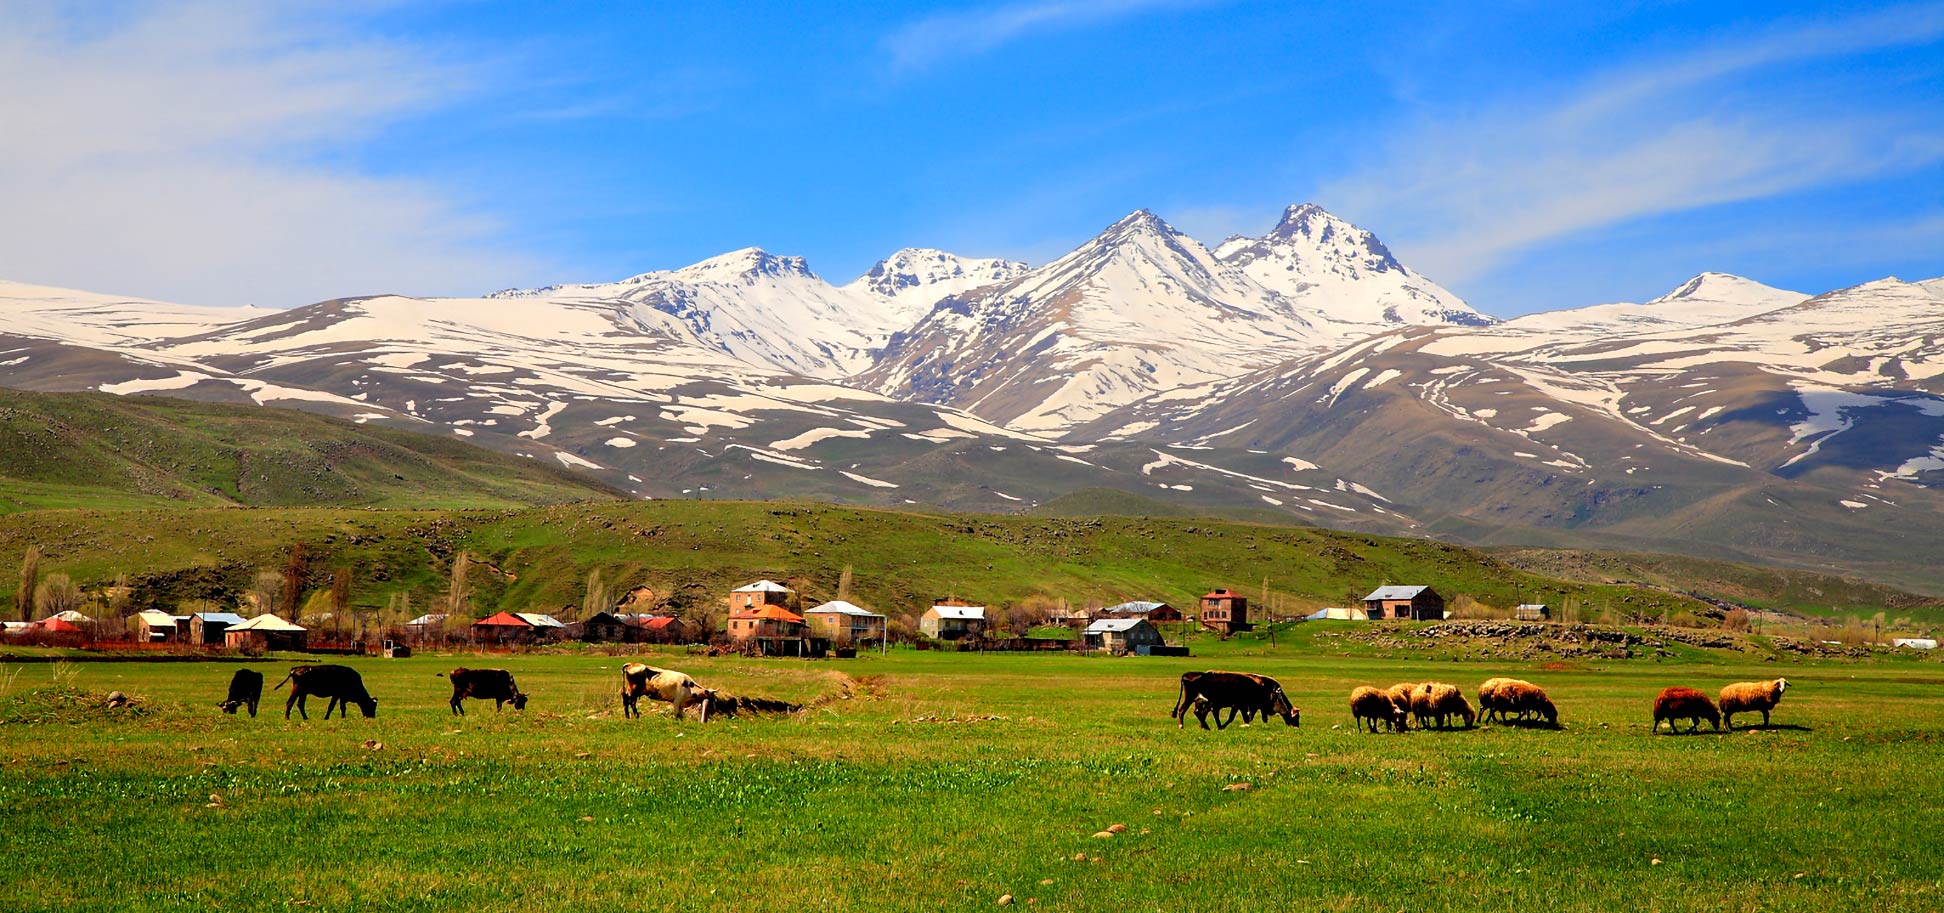 Mount Aragats in Aragatsotn province of Armenia